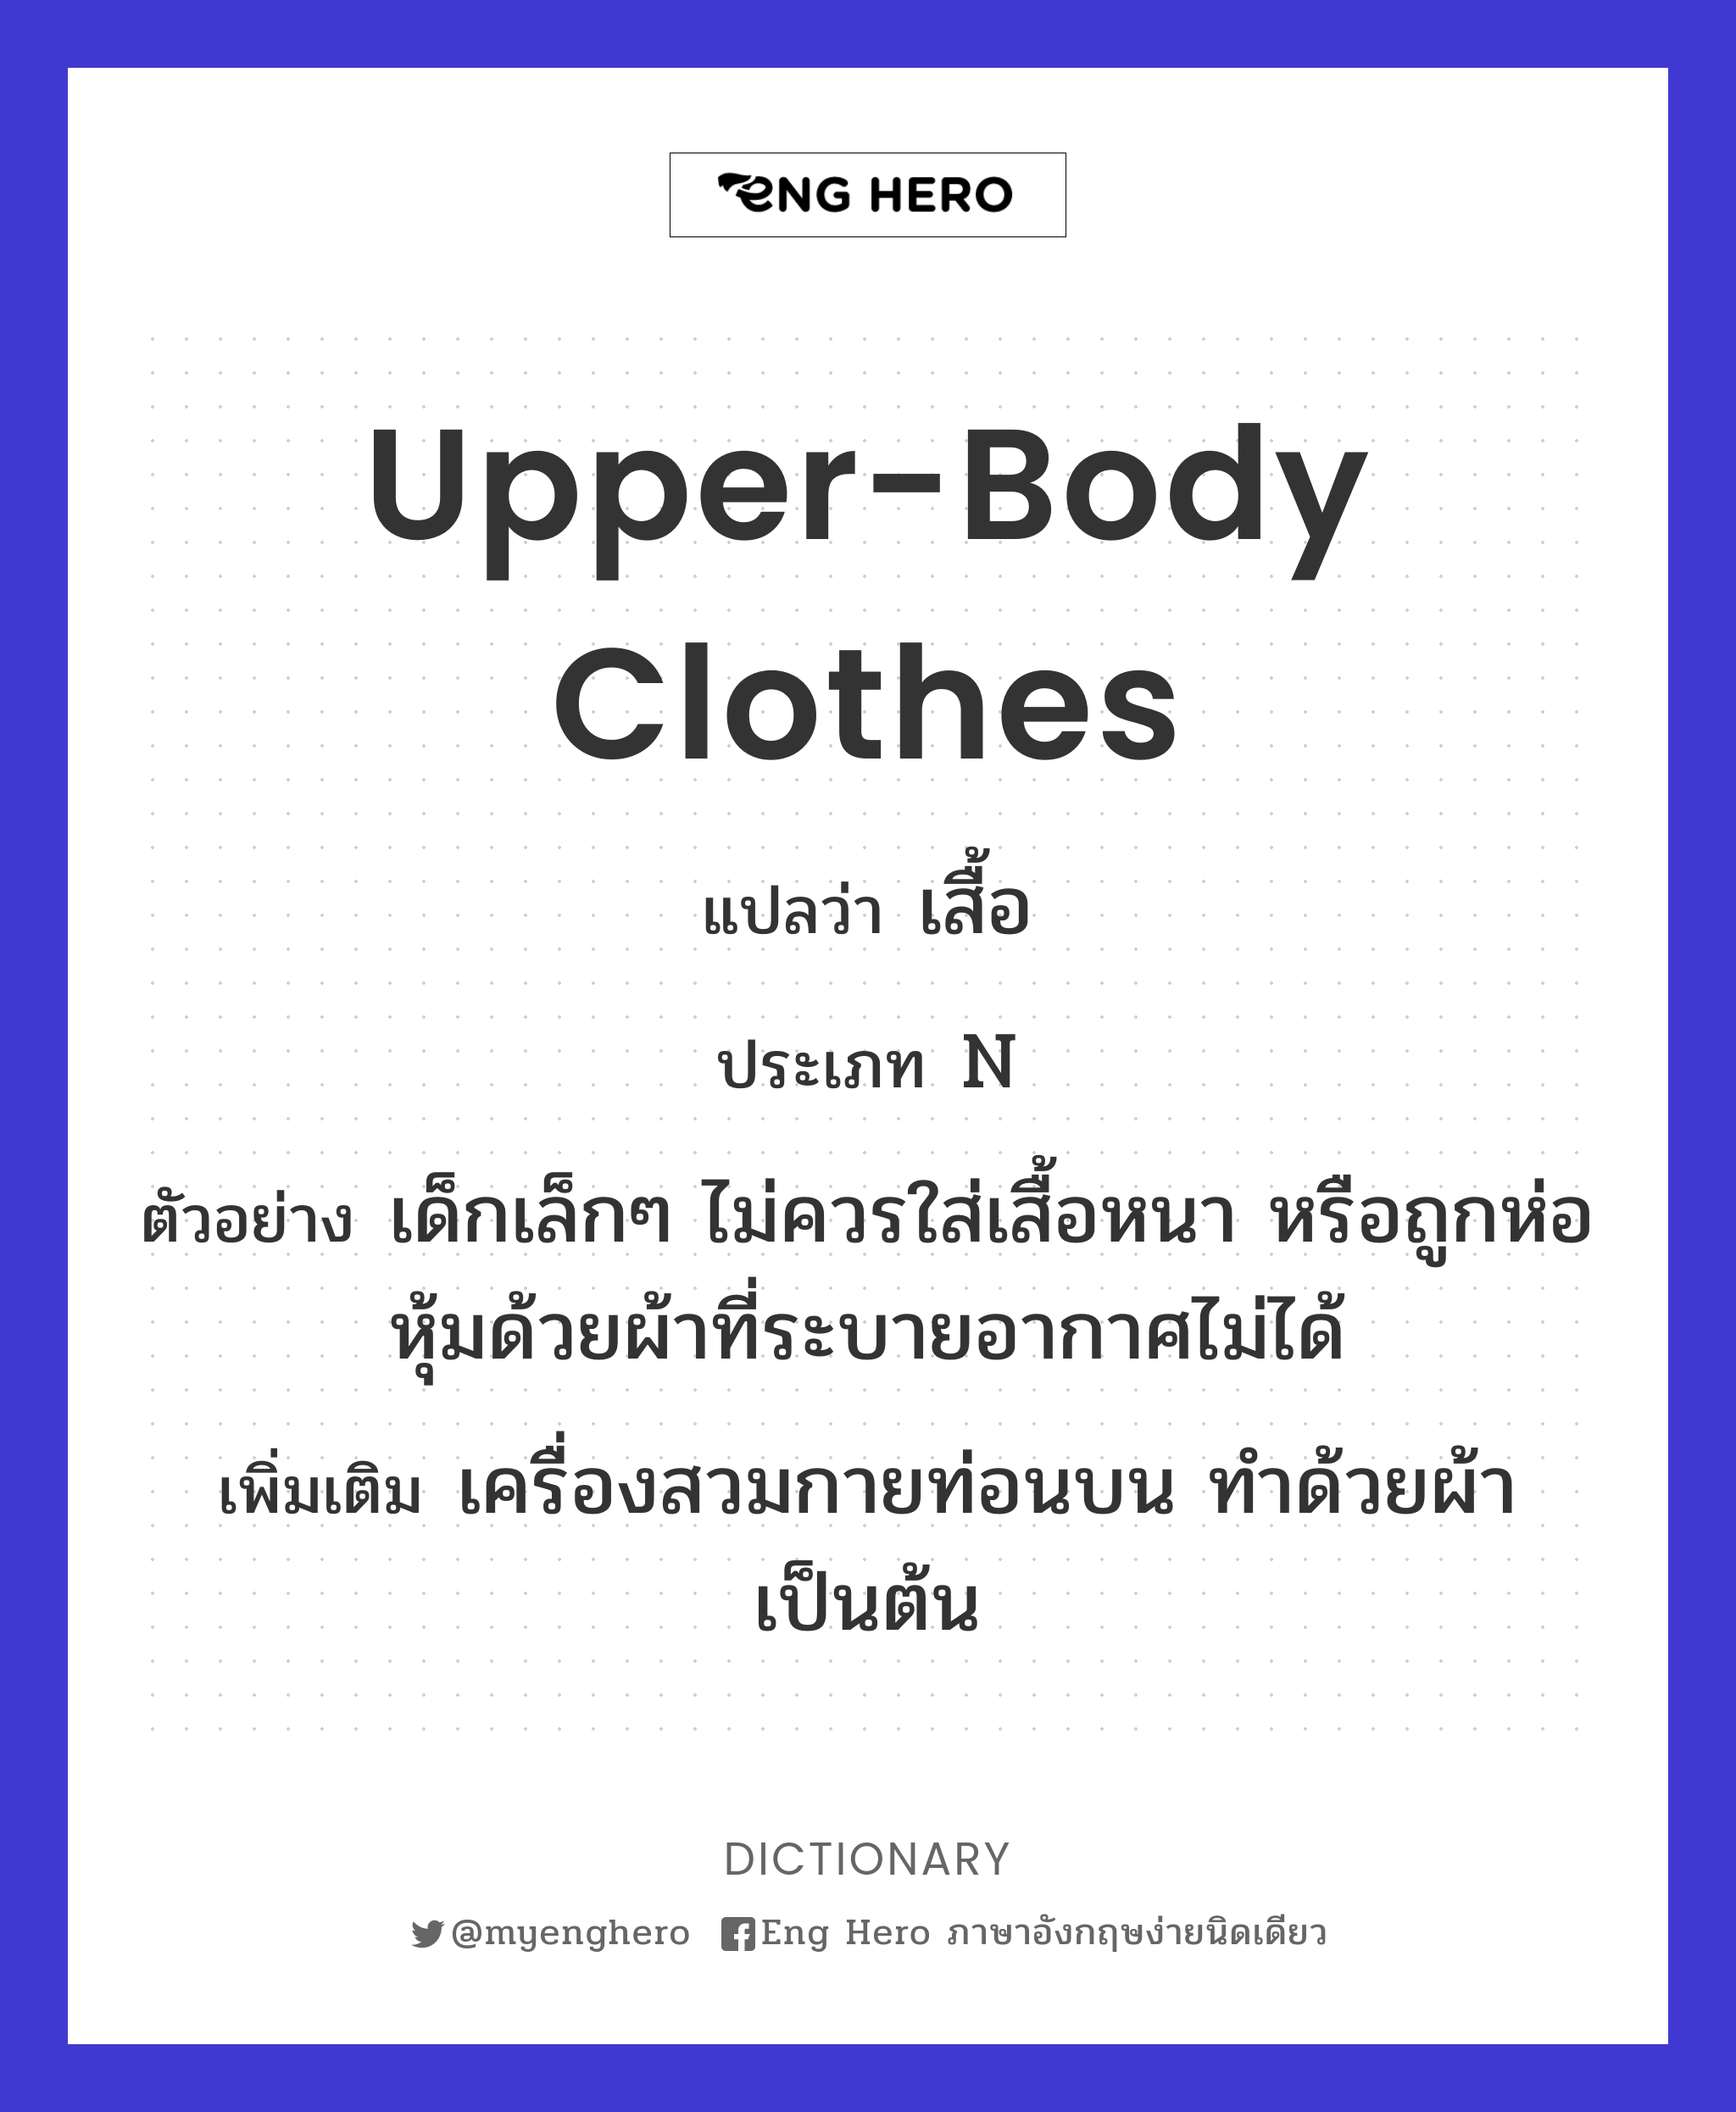 upper-body clothes